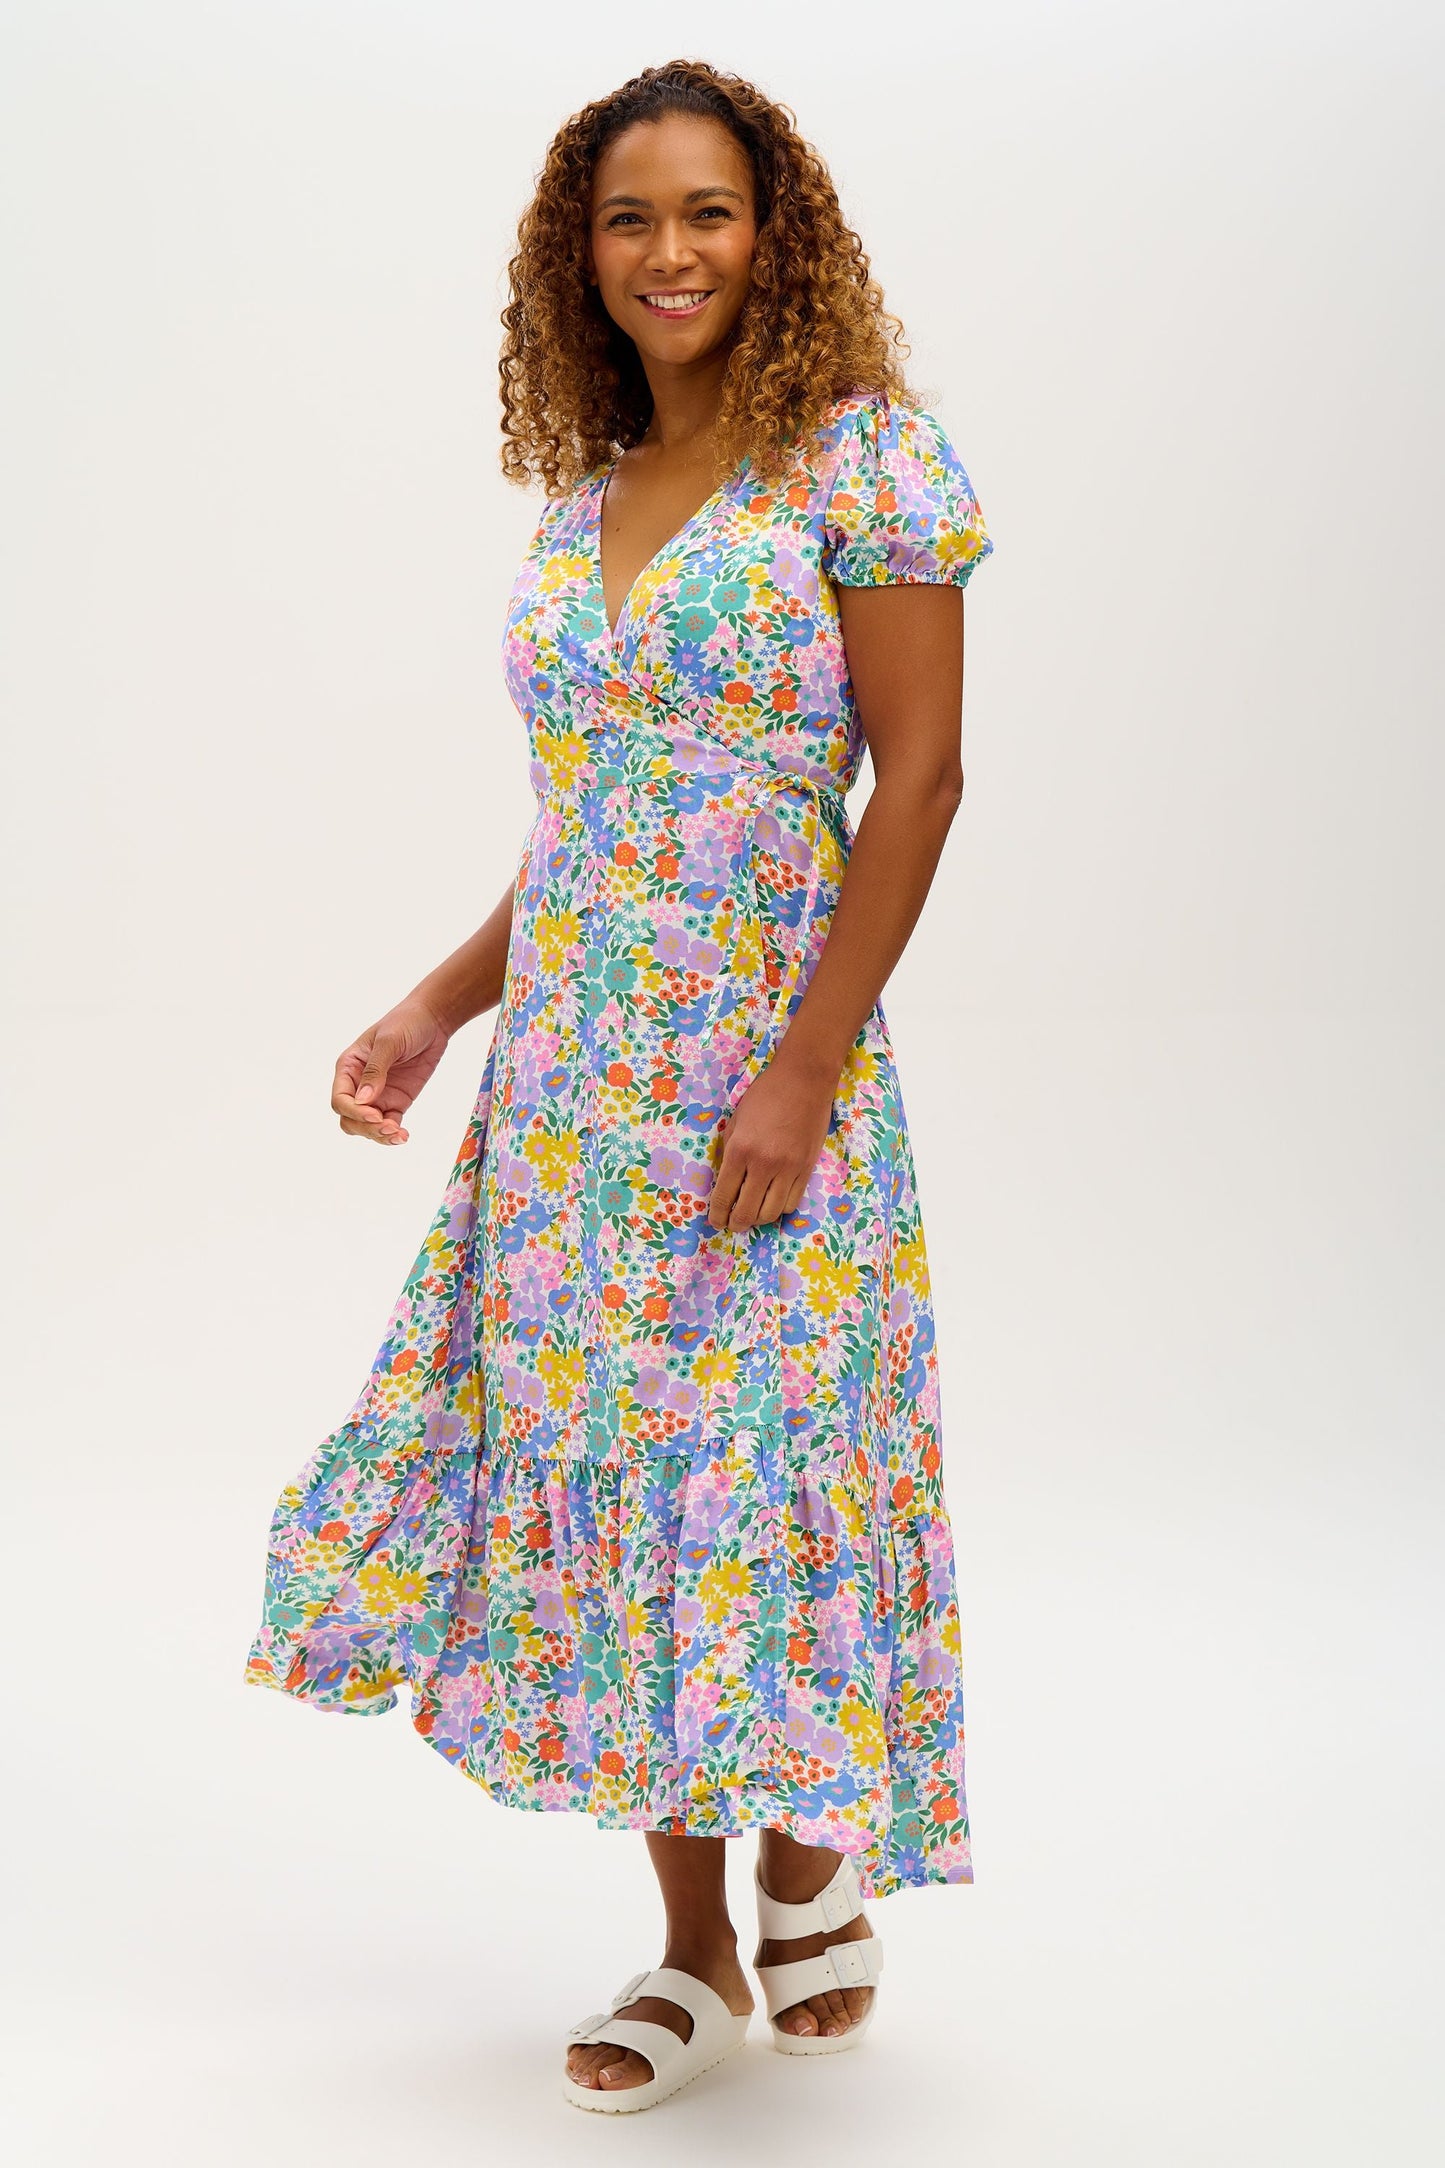 *Jameela Midi Wrap Dress - Multi, Busy Floral*